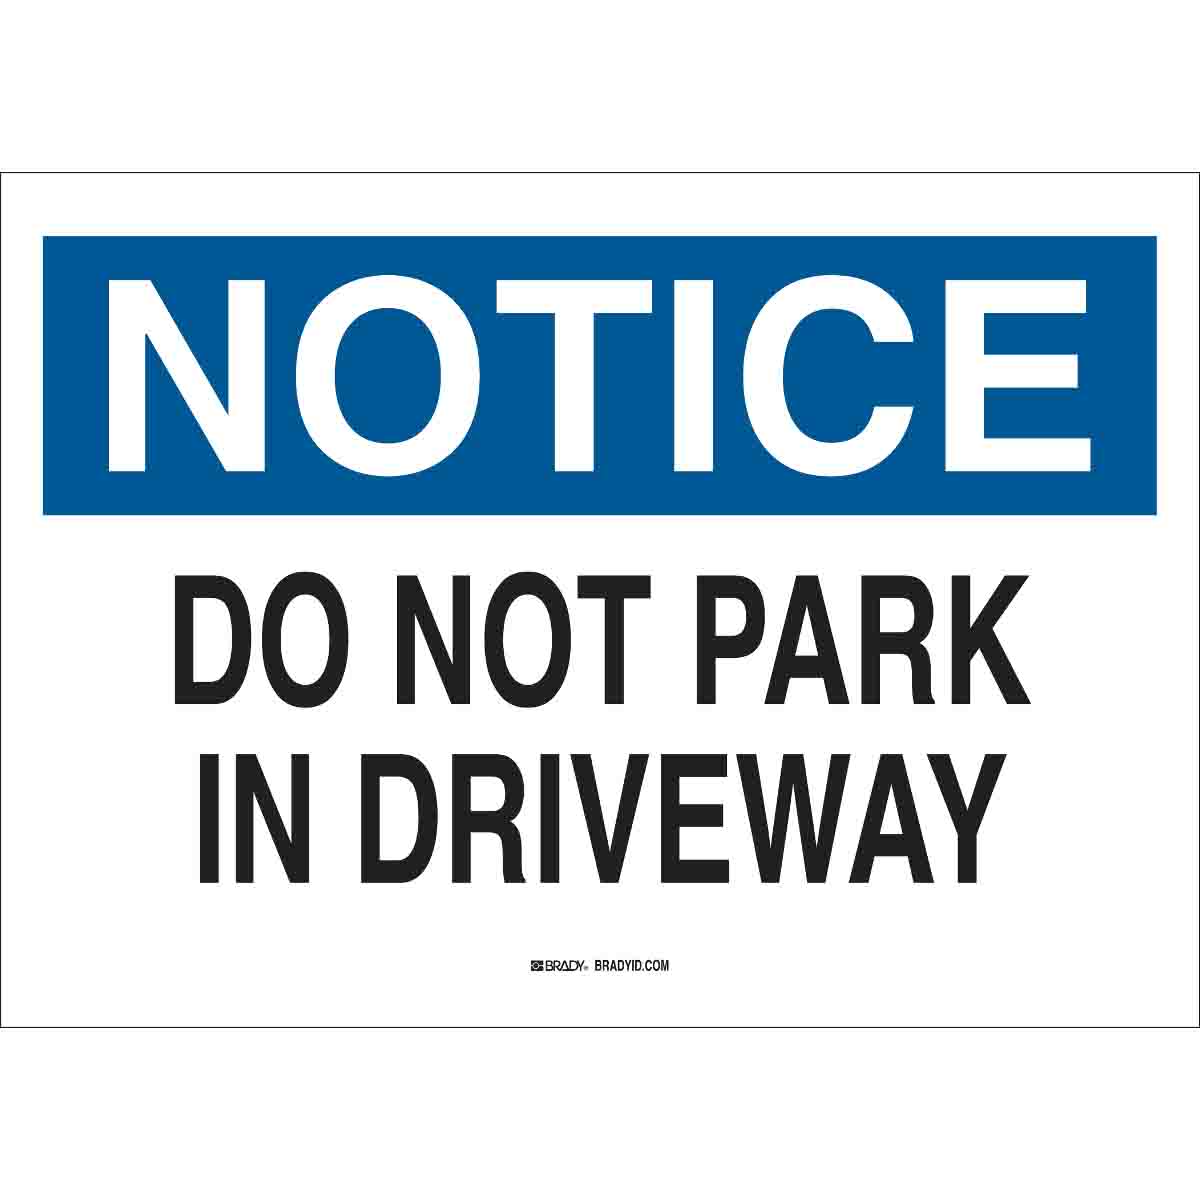 Please do not park across the drive sign polite parking obstruction notice 3044